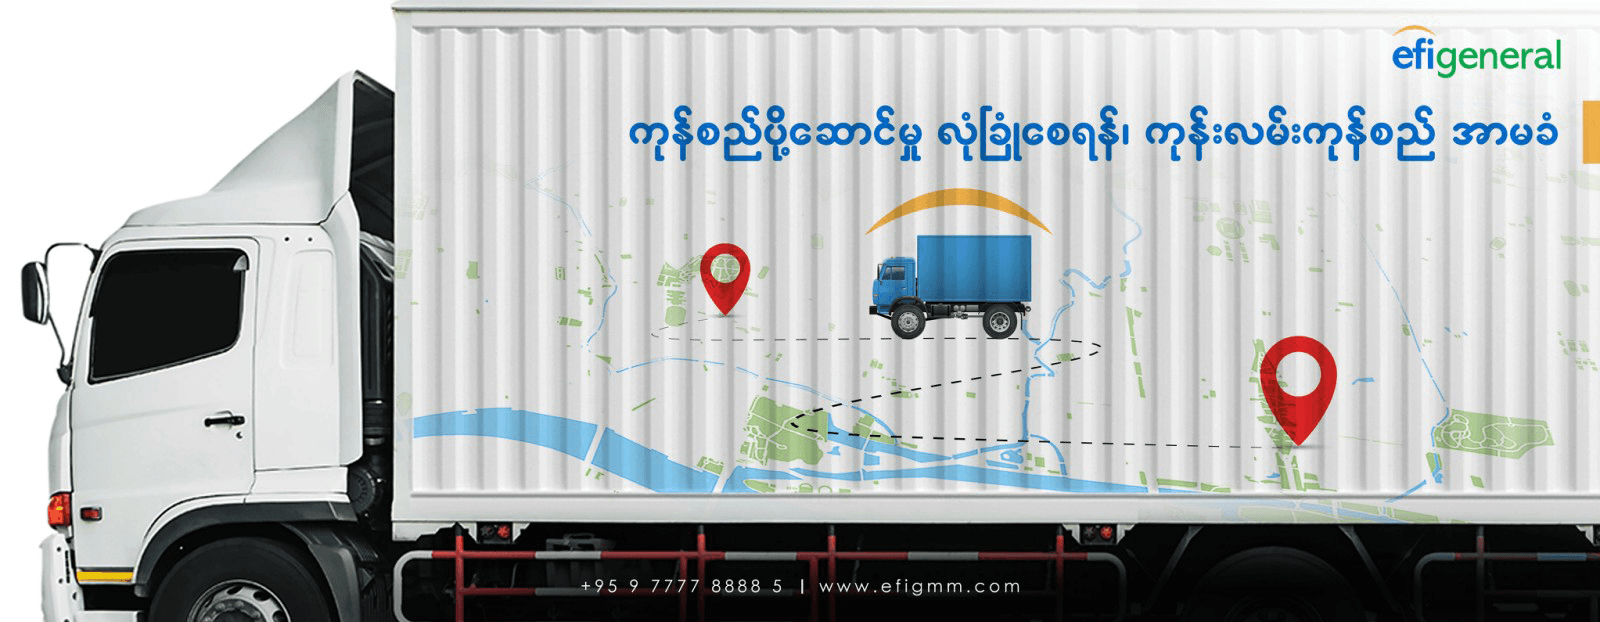 Logistics Security: Safeguarding Goods in Transit